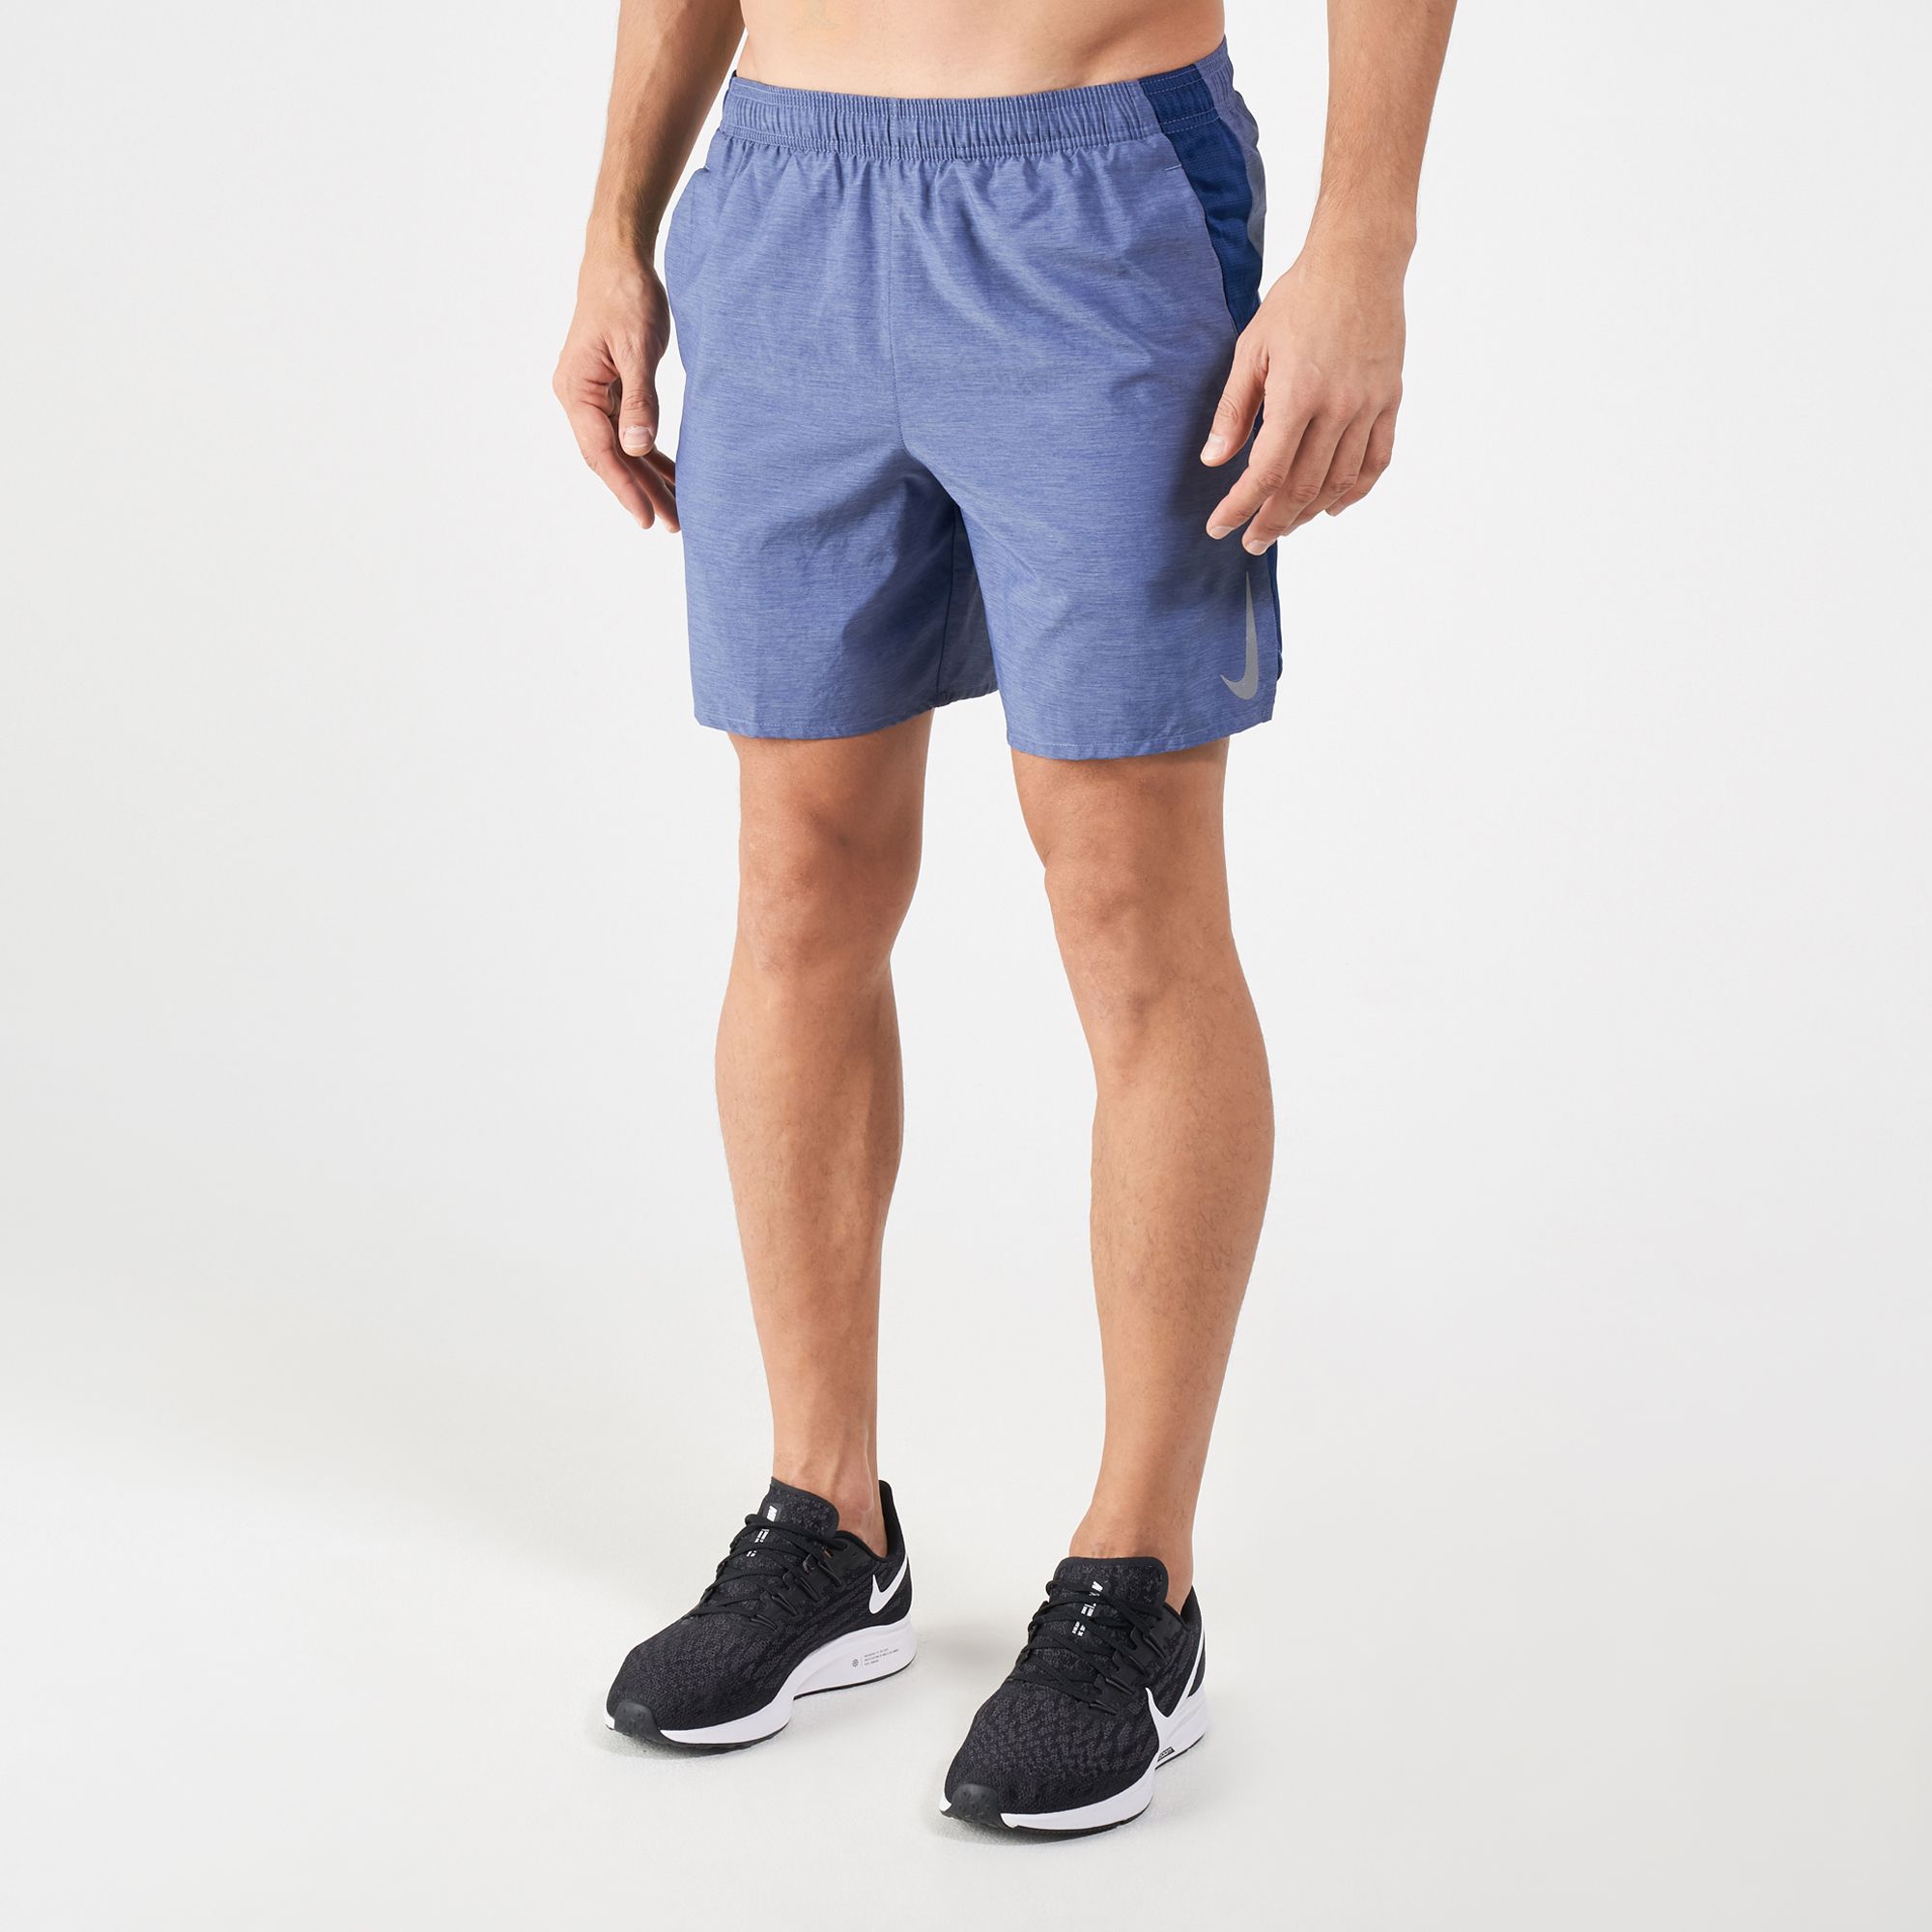 mens nike running shorts 7 inch